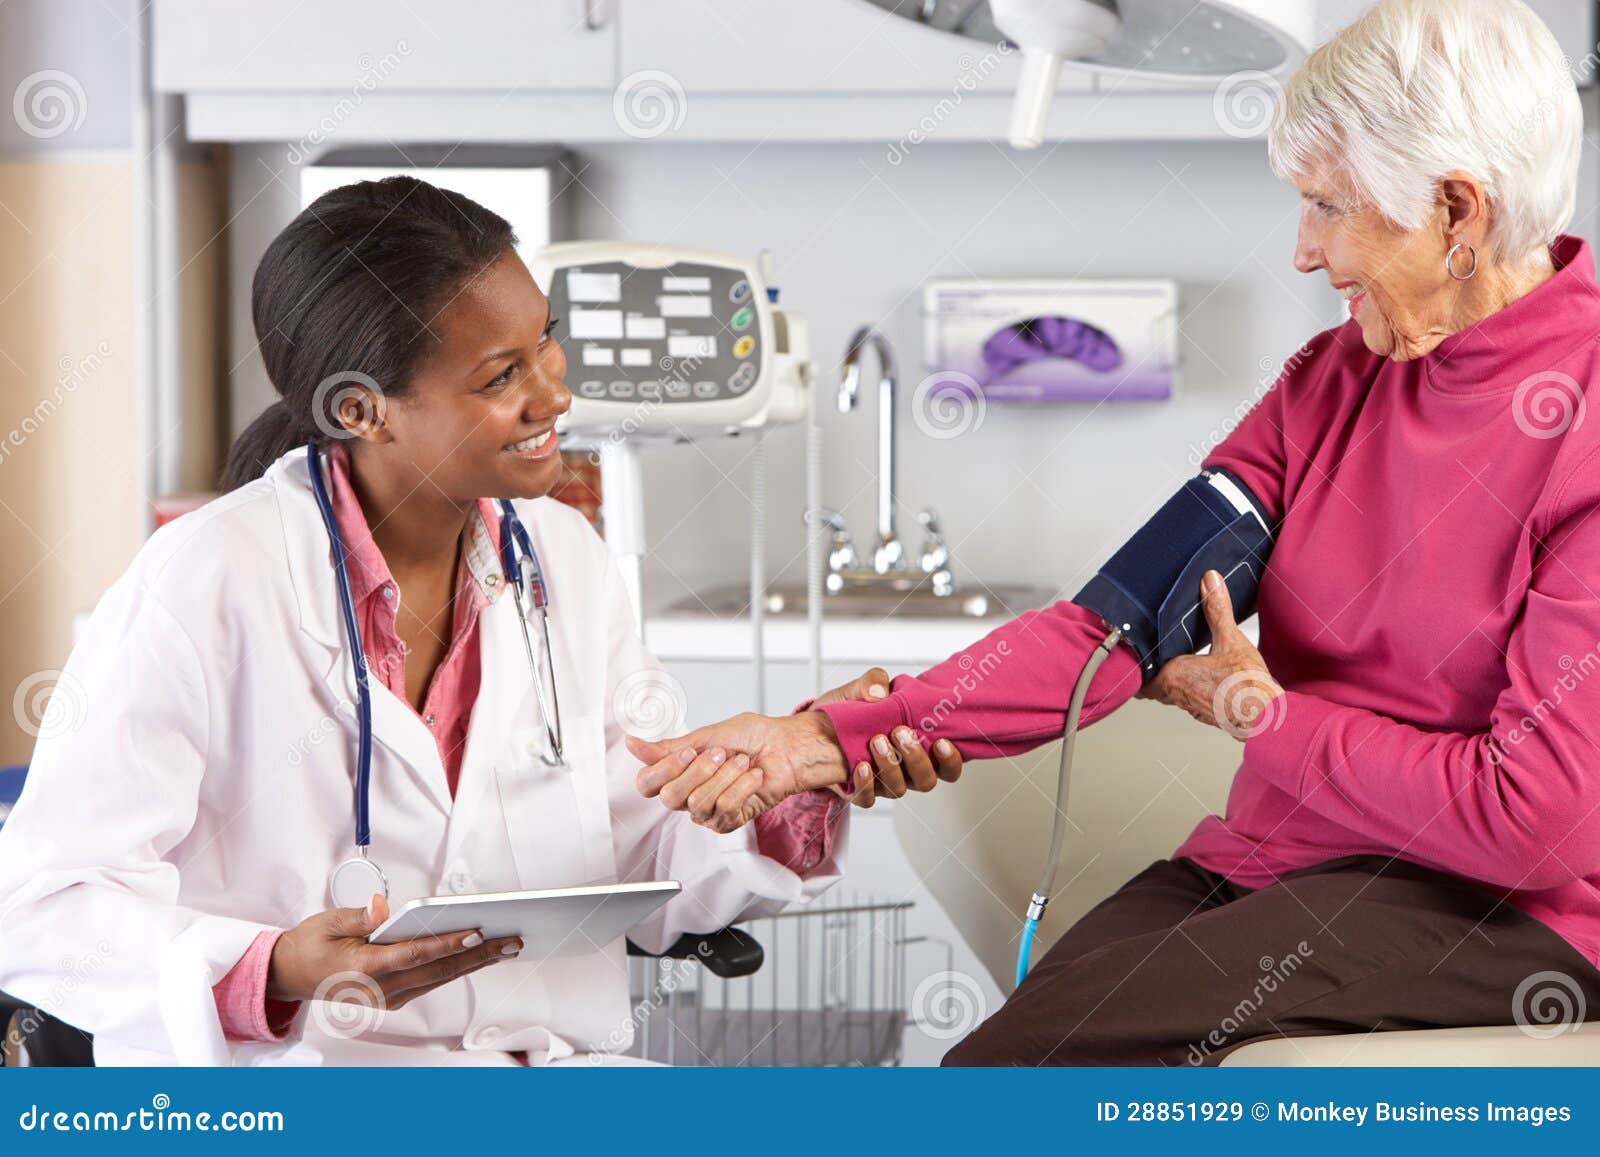 doctor taking senior female patient's blood pressure